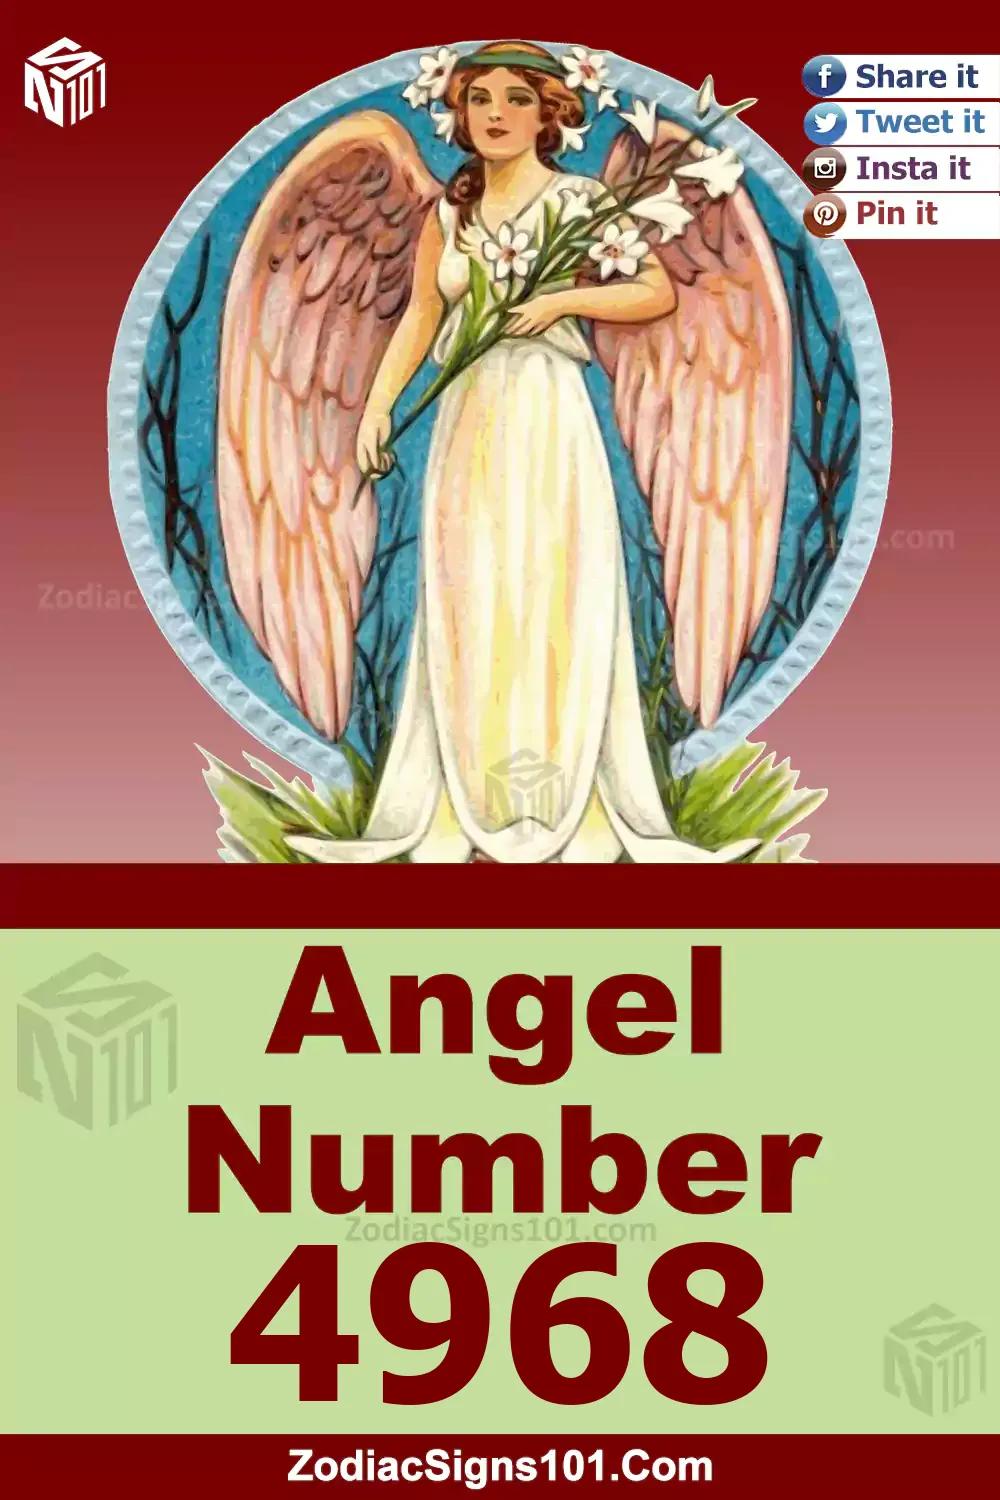 4968-Angel-Number-Meaning.jpg